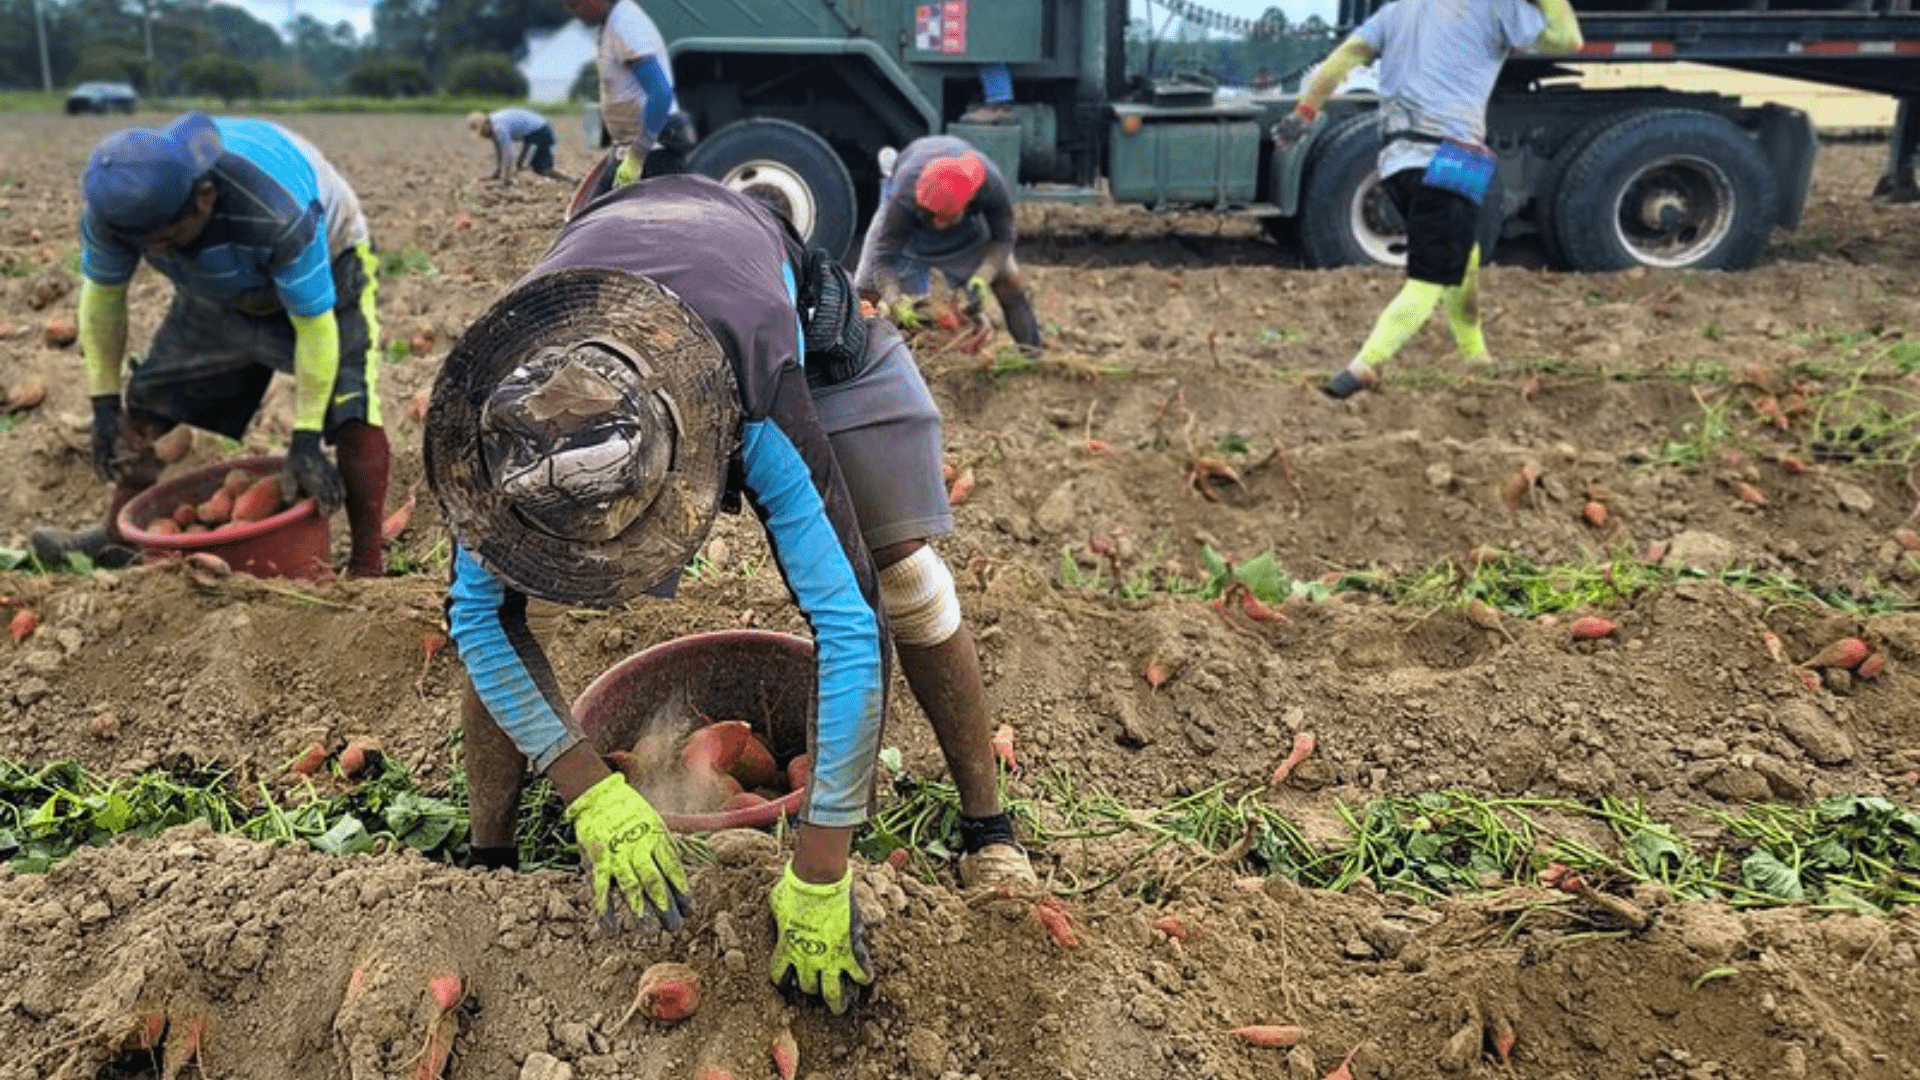 Enrique Pena's winning photo of farmworkers harvesting sweetpotatoes